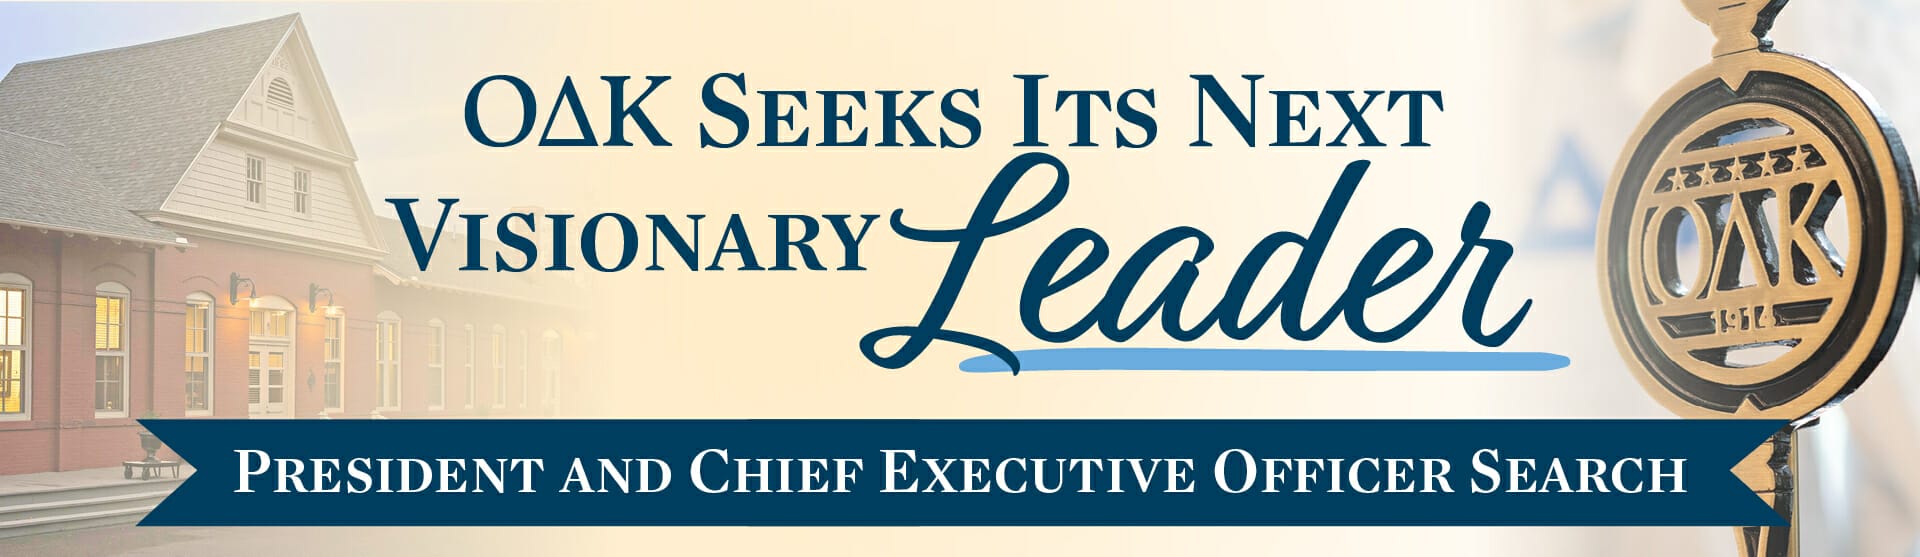 Inspiring the Next Generation: Introducing the Visionary Leadership Award